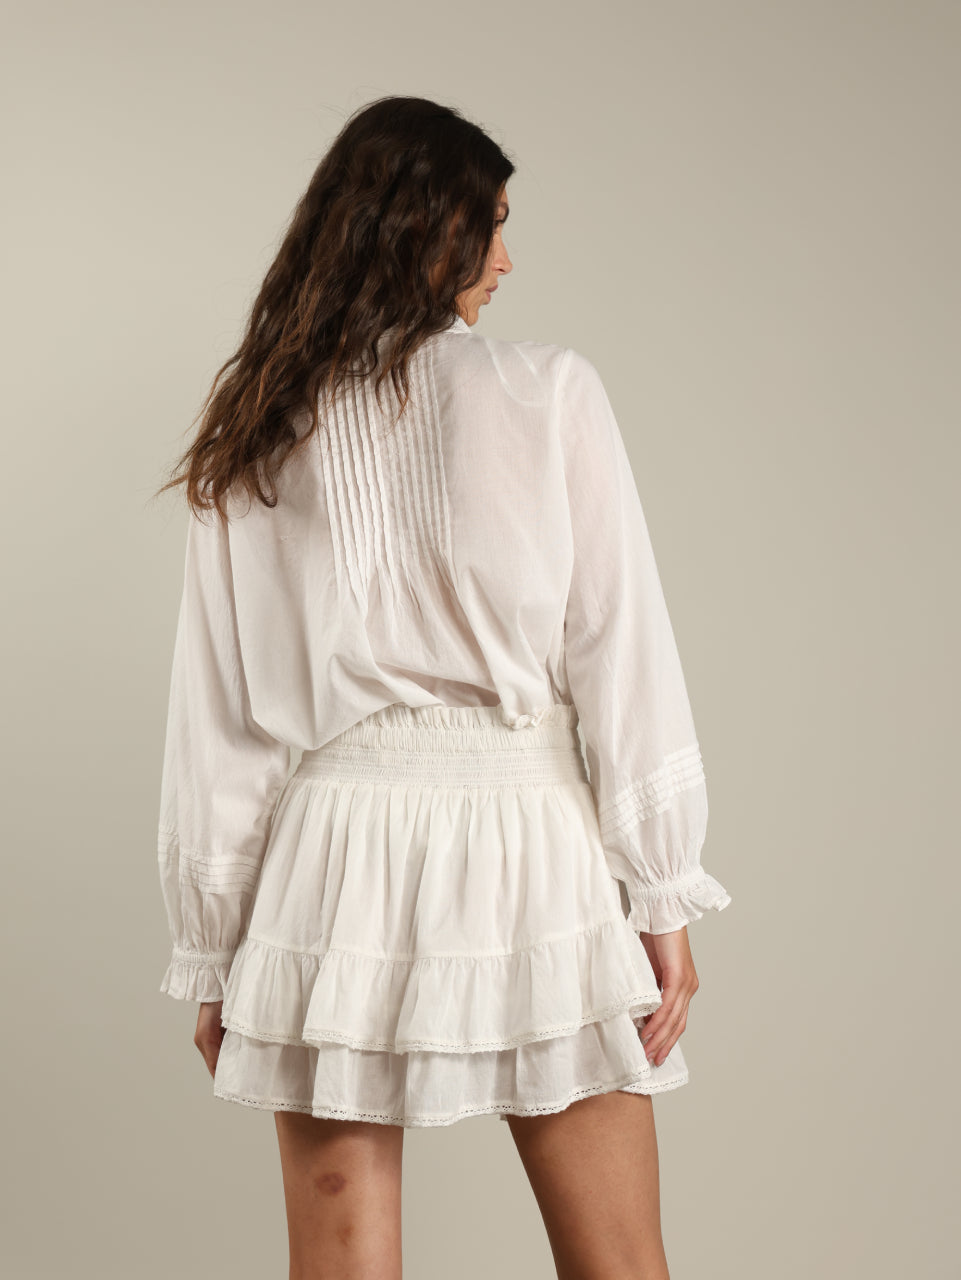 Lace Short Skirt